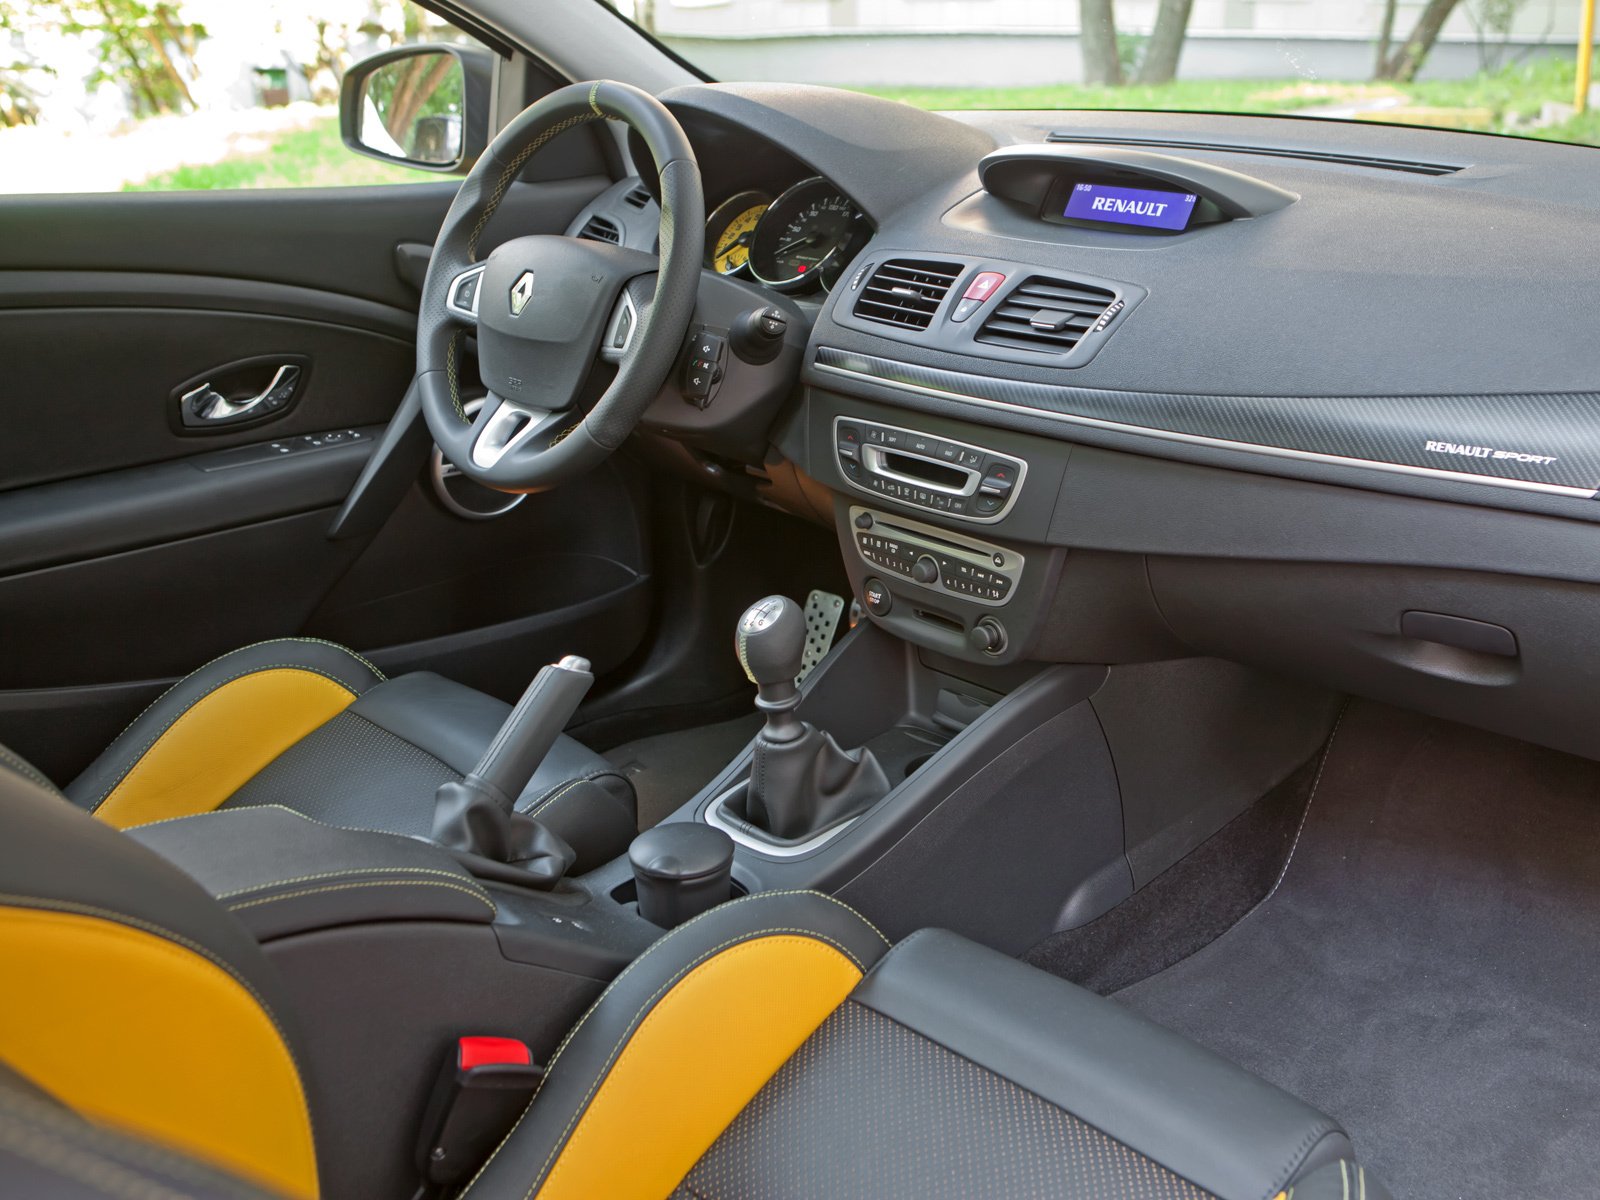 Renault Megane 3 Interior